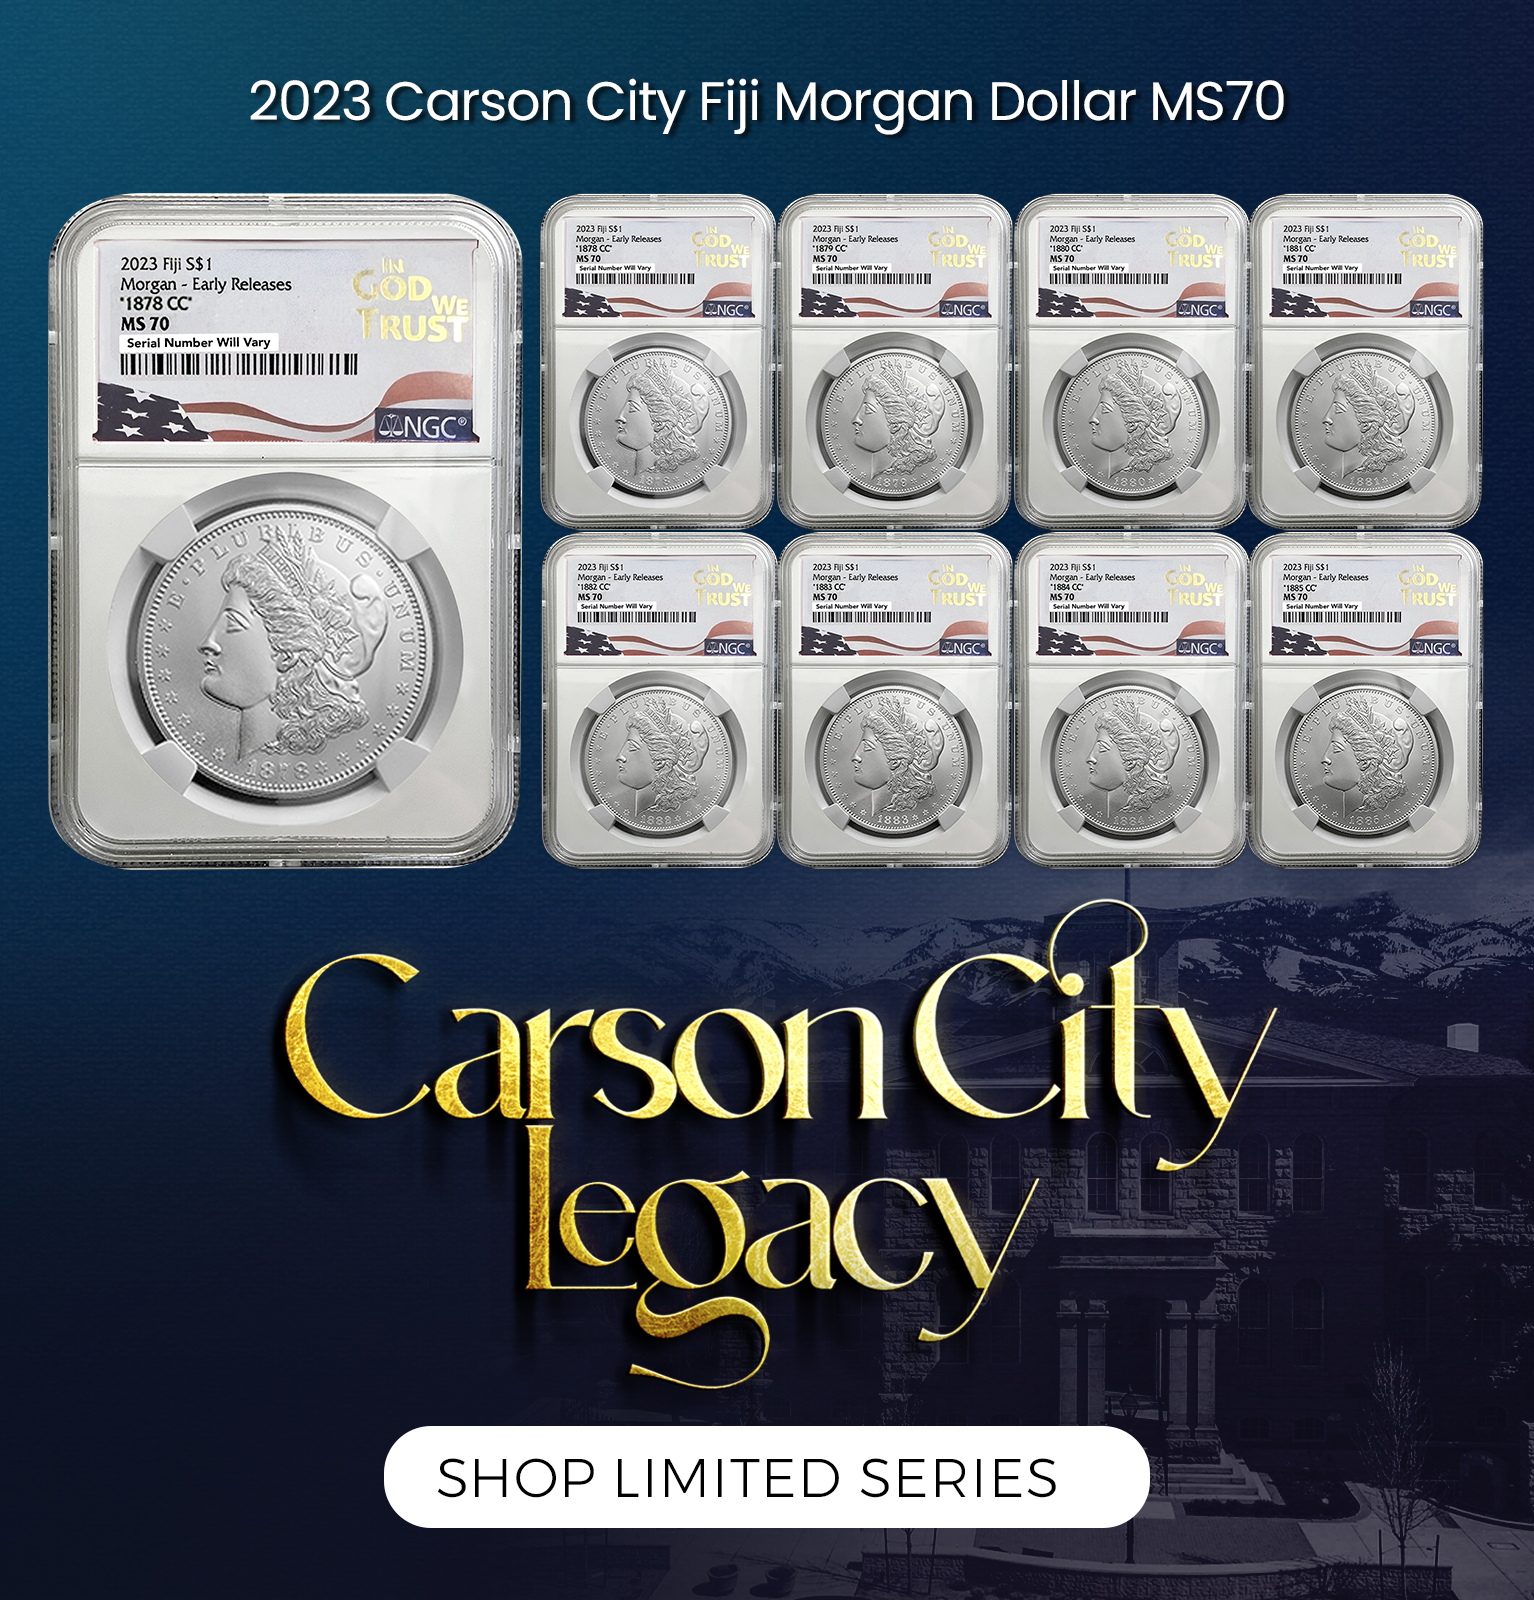 1883-CC Carson City Mint $1 Morgan Silver Dollar NGC MS64 - Free Shipping  USA - The Happy Coin